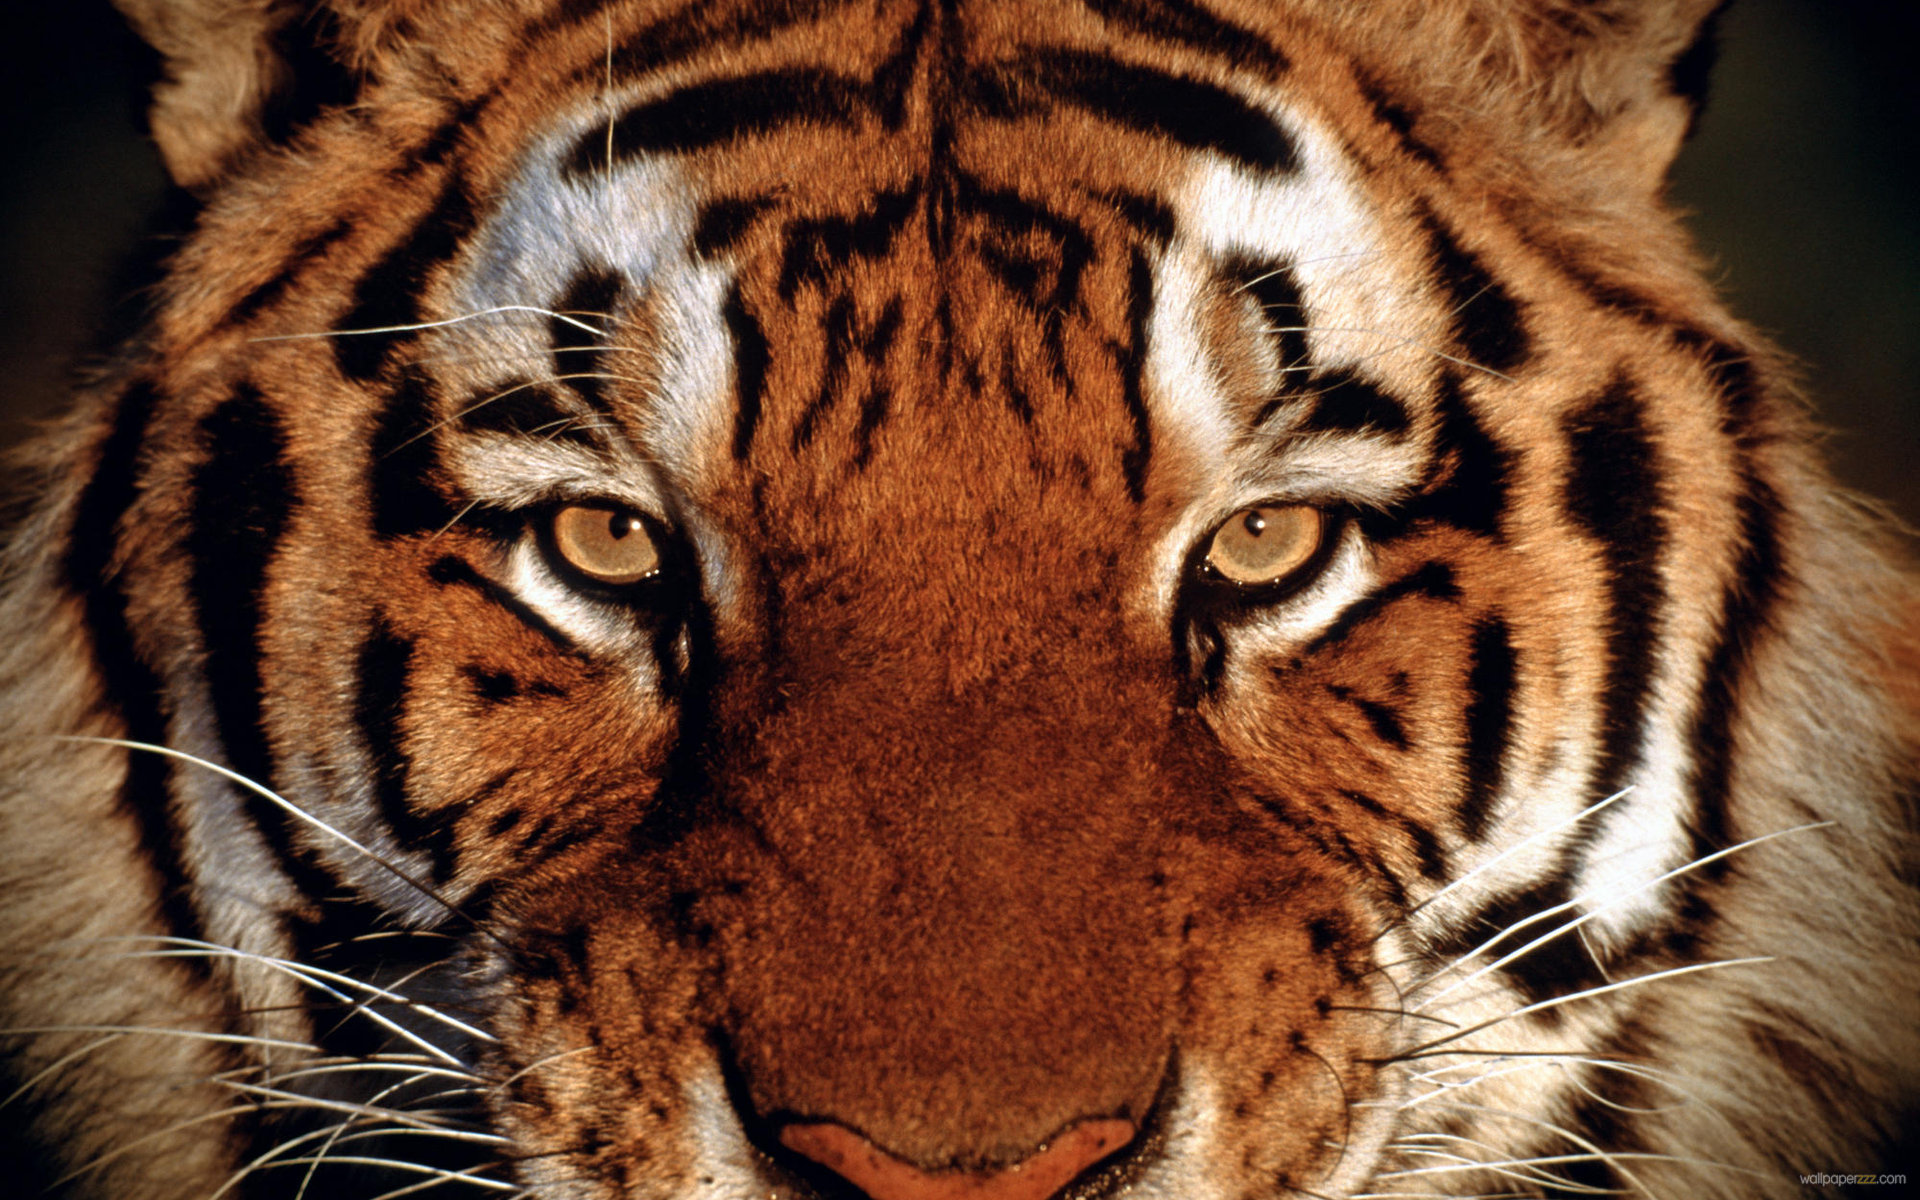 Tiger Face Widescreen Wallpaper